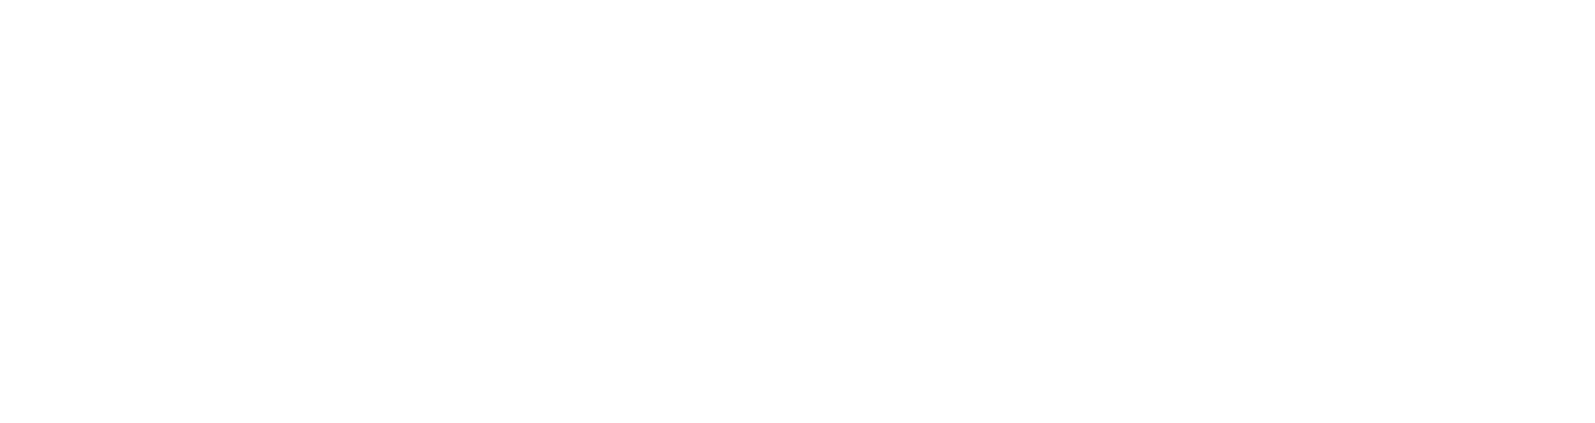 Intact Financial Logo groß für dunkle Hintergründe (transparentes PNG)